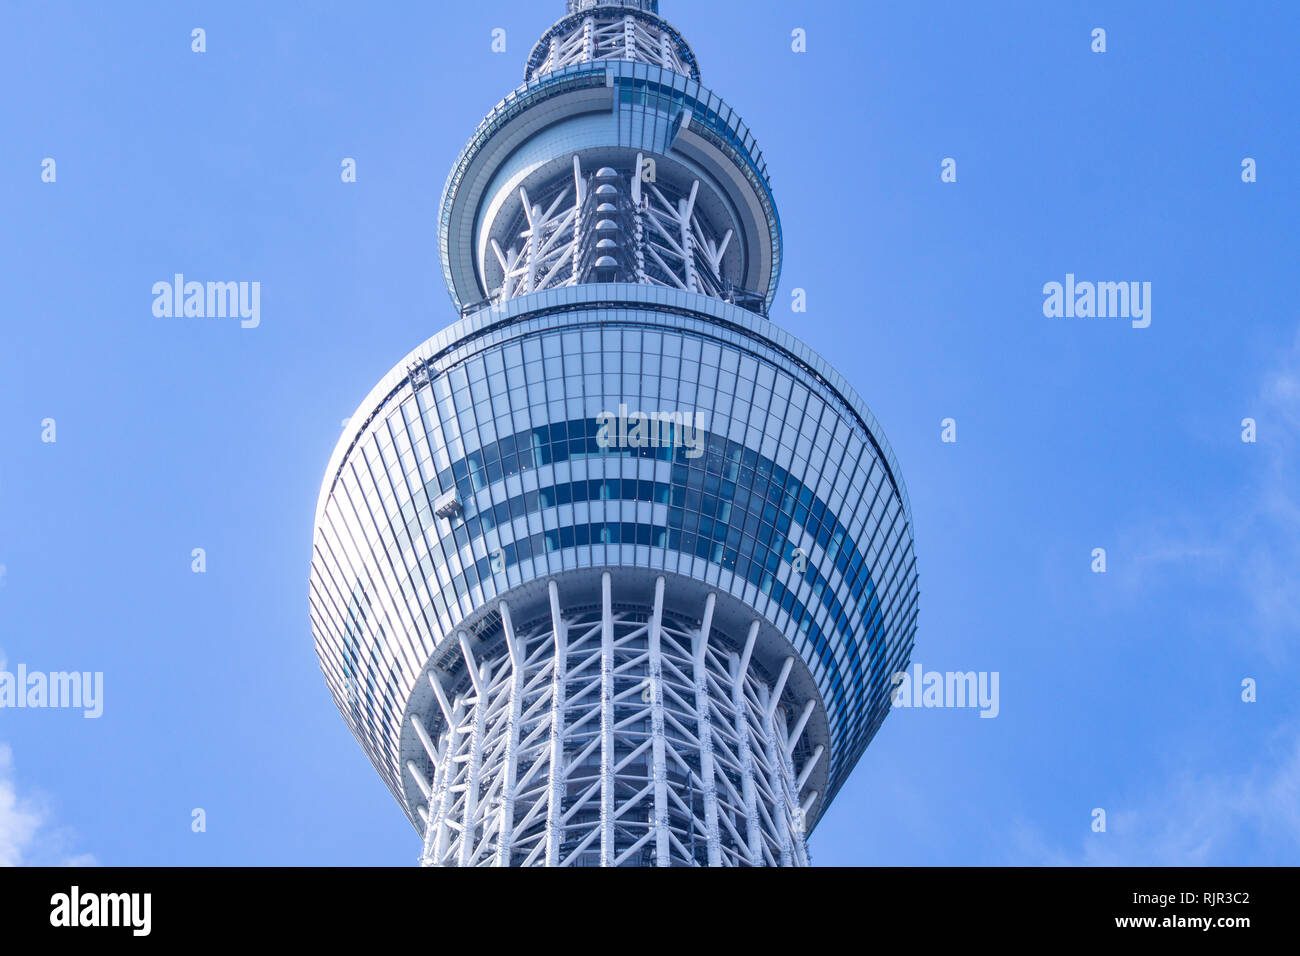 TOKYO, Giappone - 21 Novembre 2018: una parte del Giappone Tokyo skytree edificio a torre con un cielo blu Foto Stock